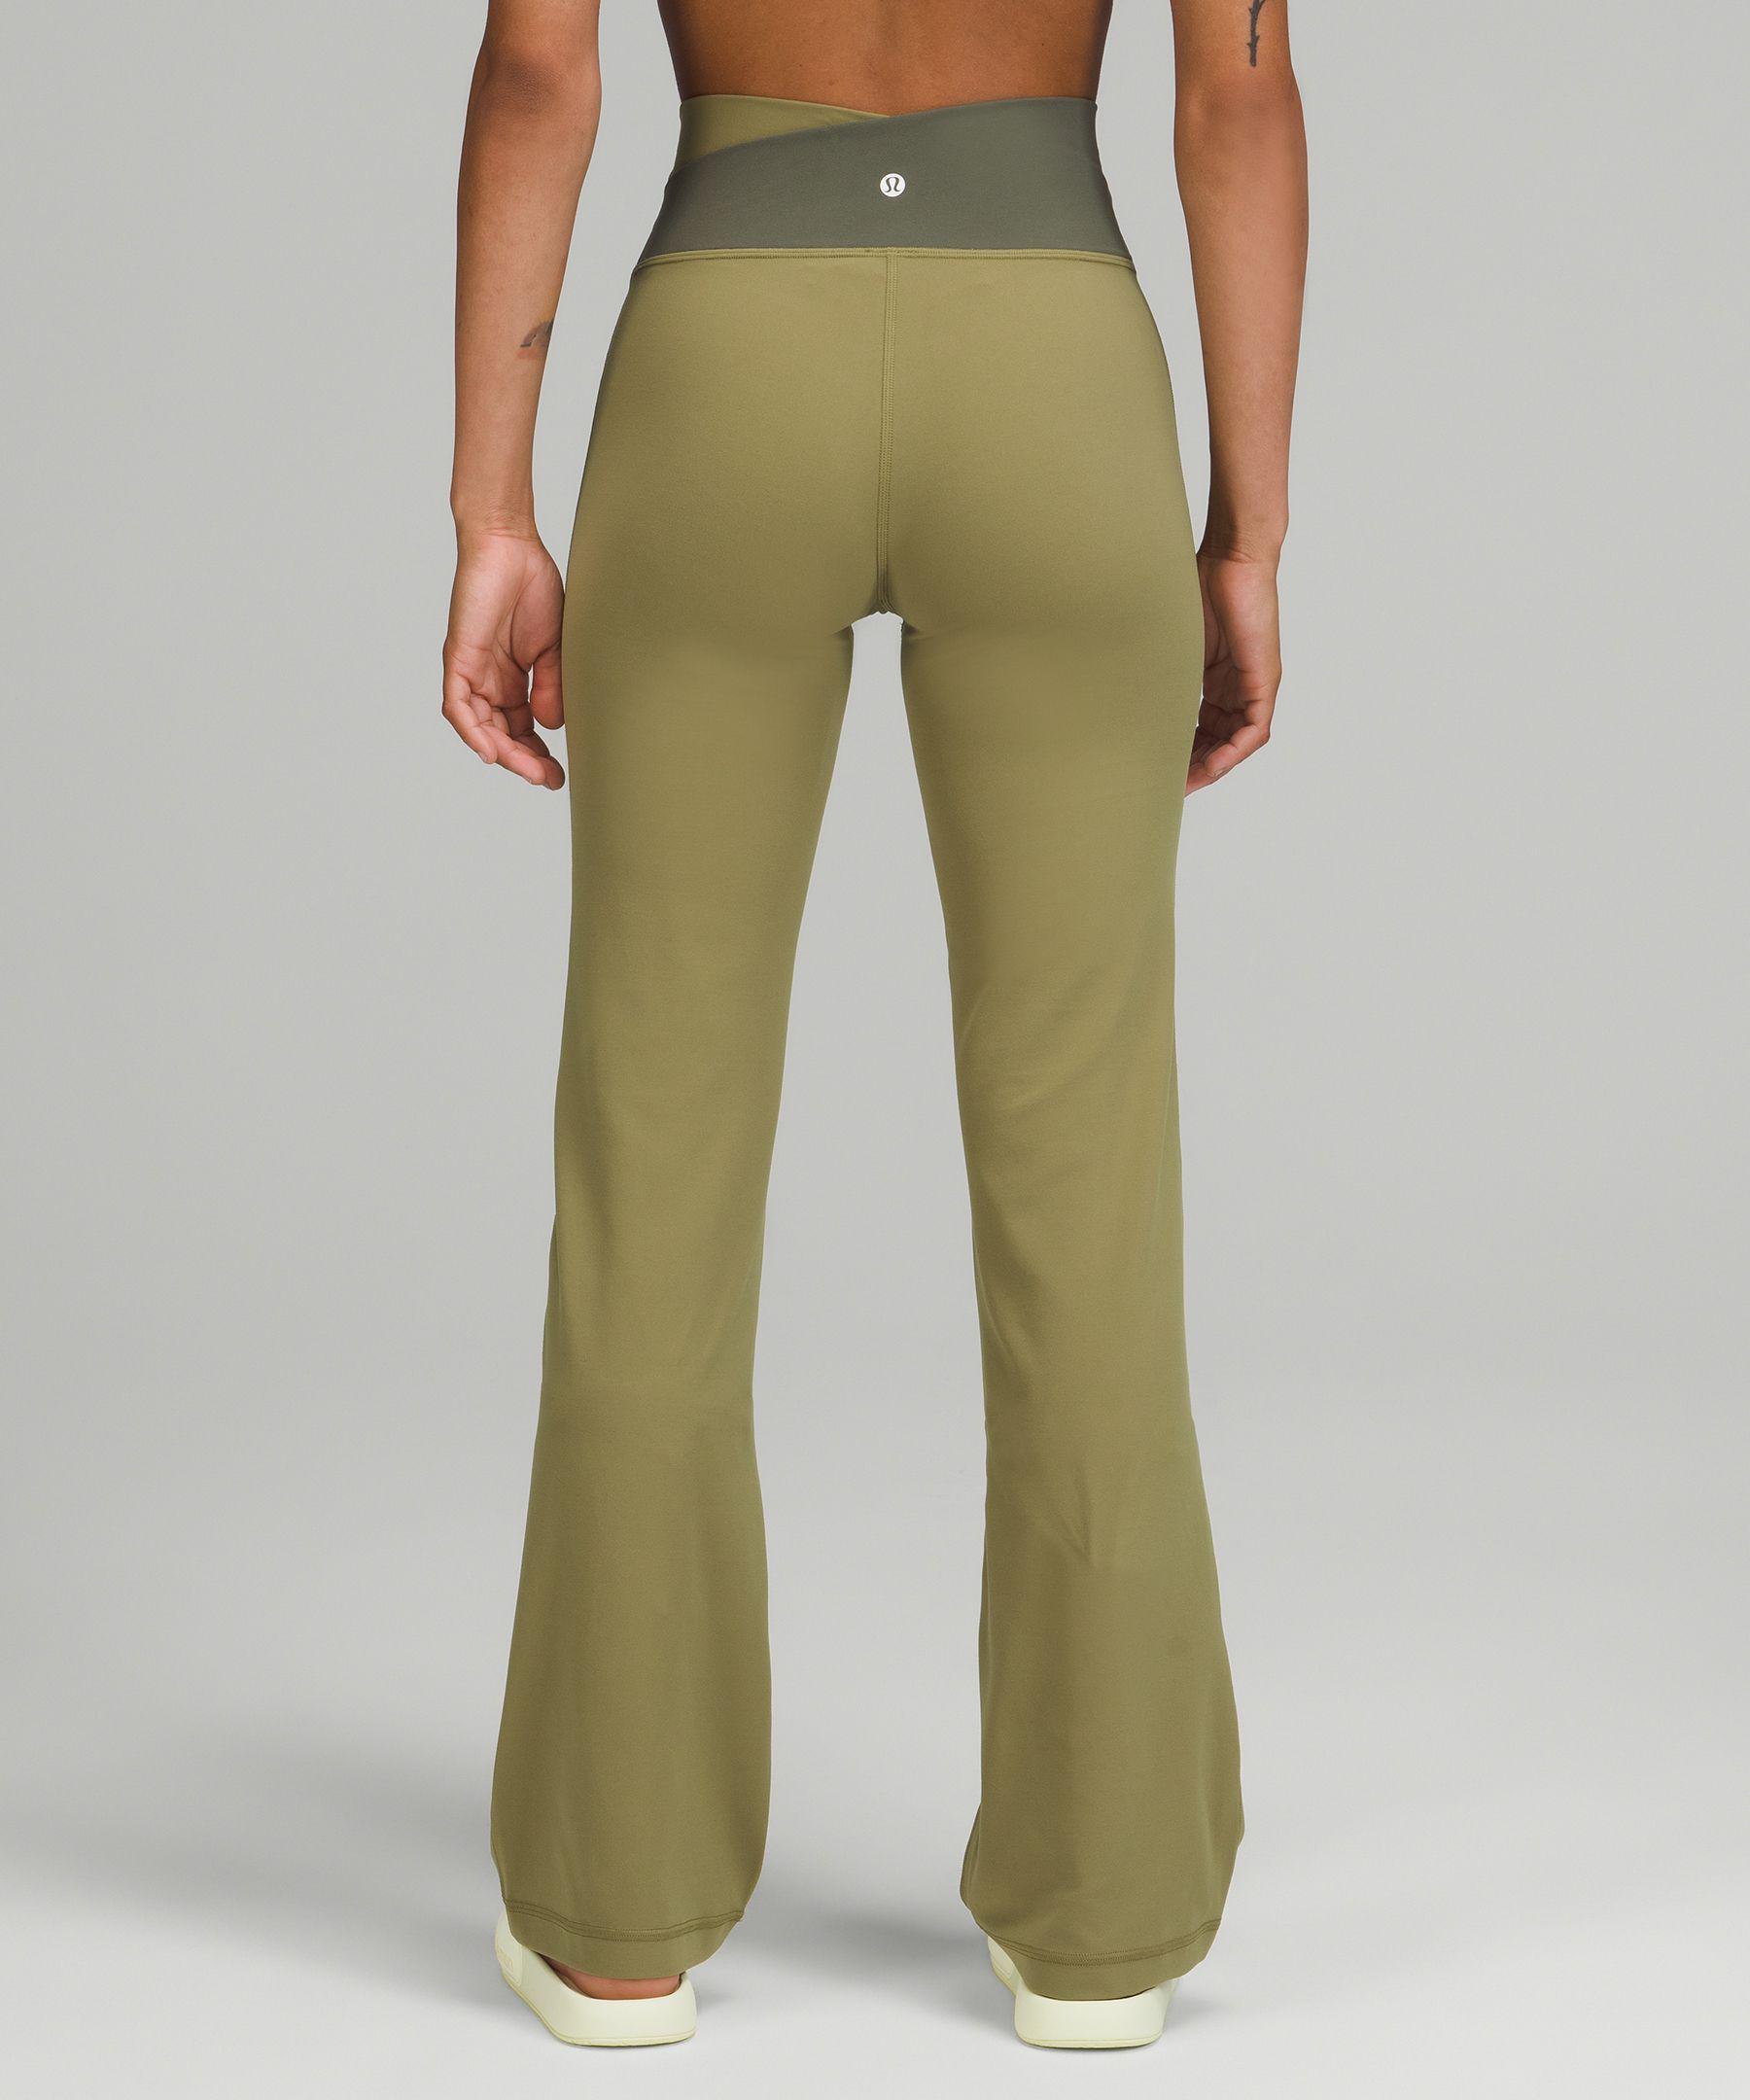 Lululemon Astro Pants Size 6 - $36 - From Julia